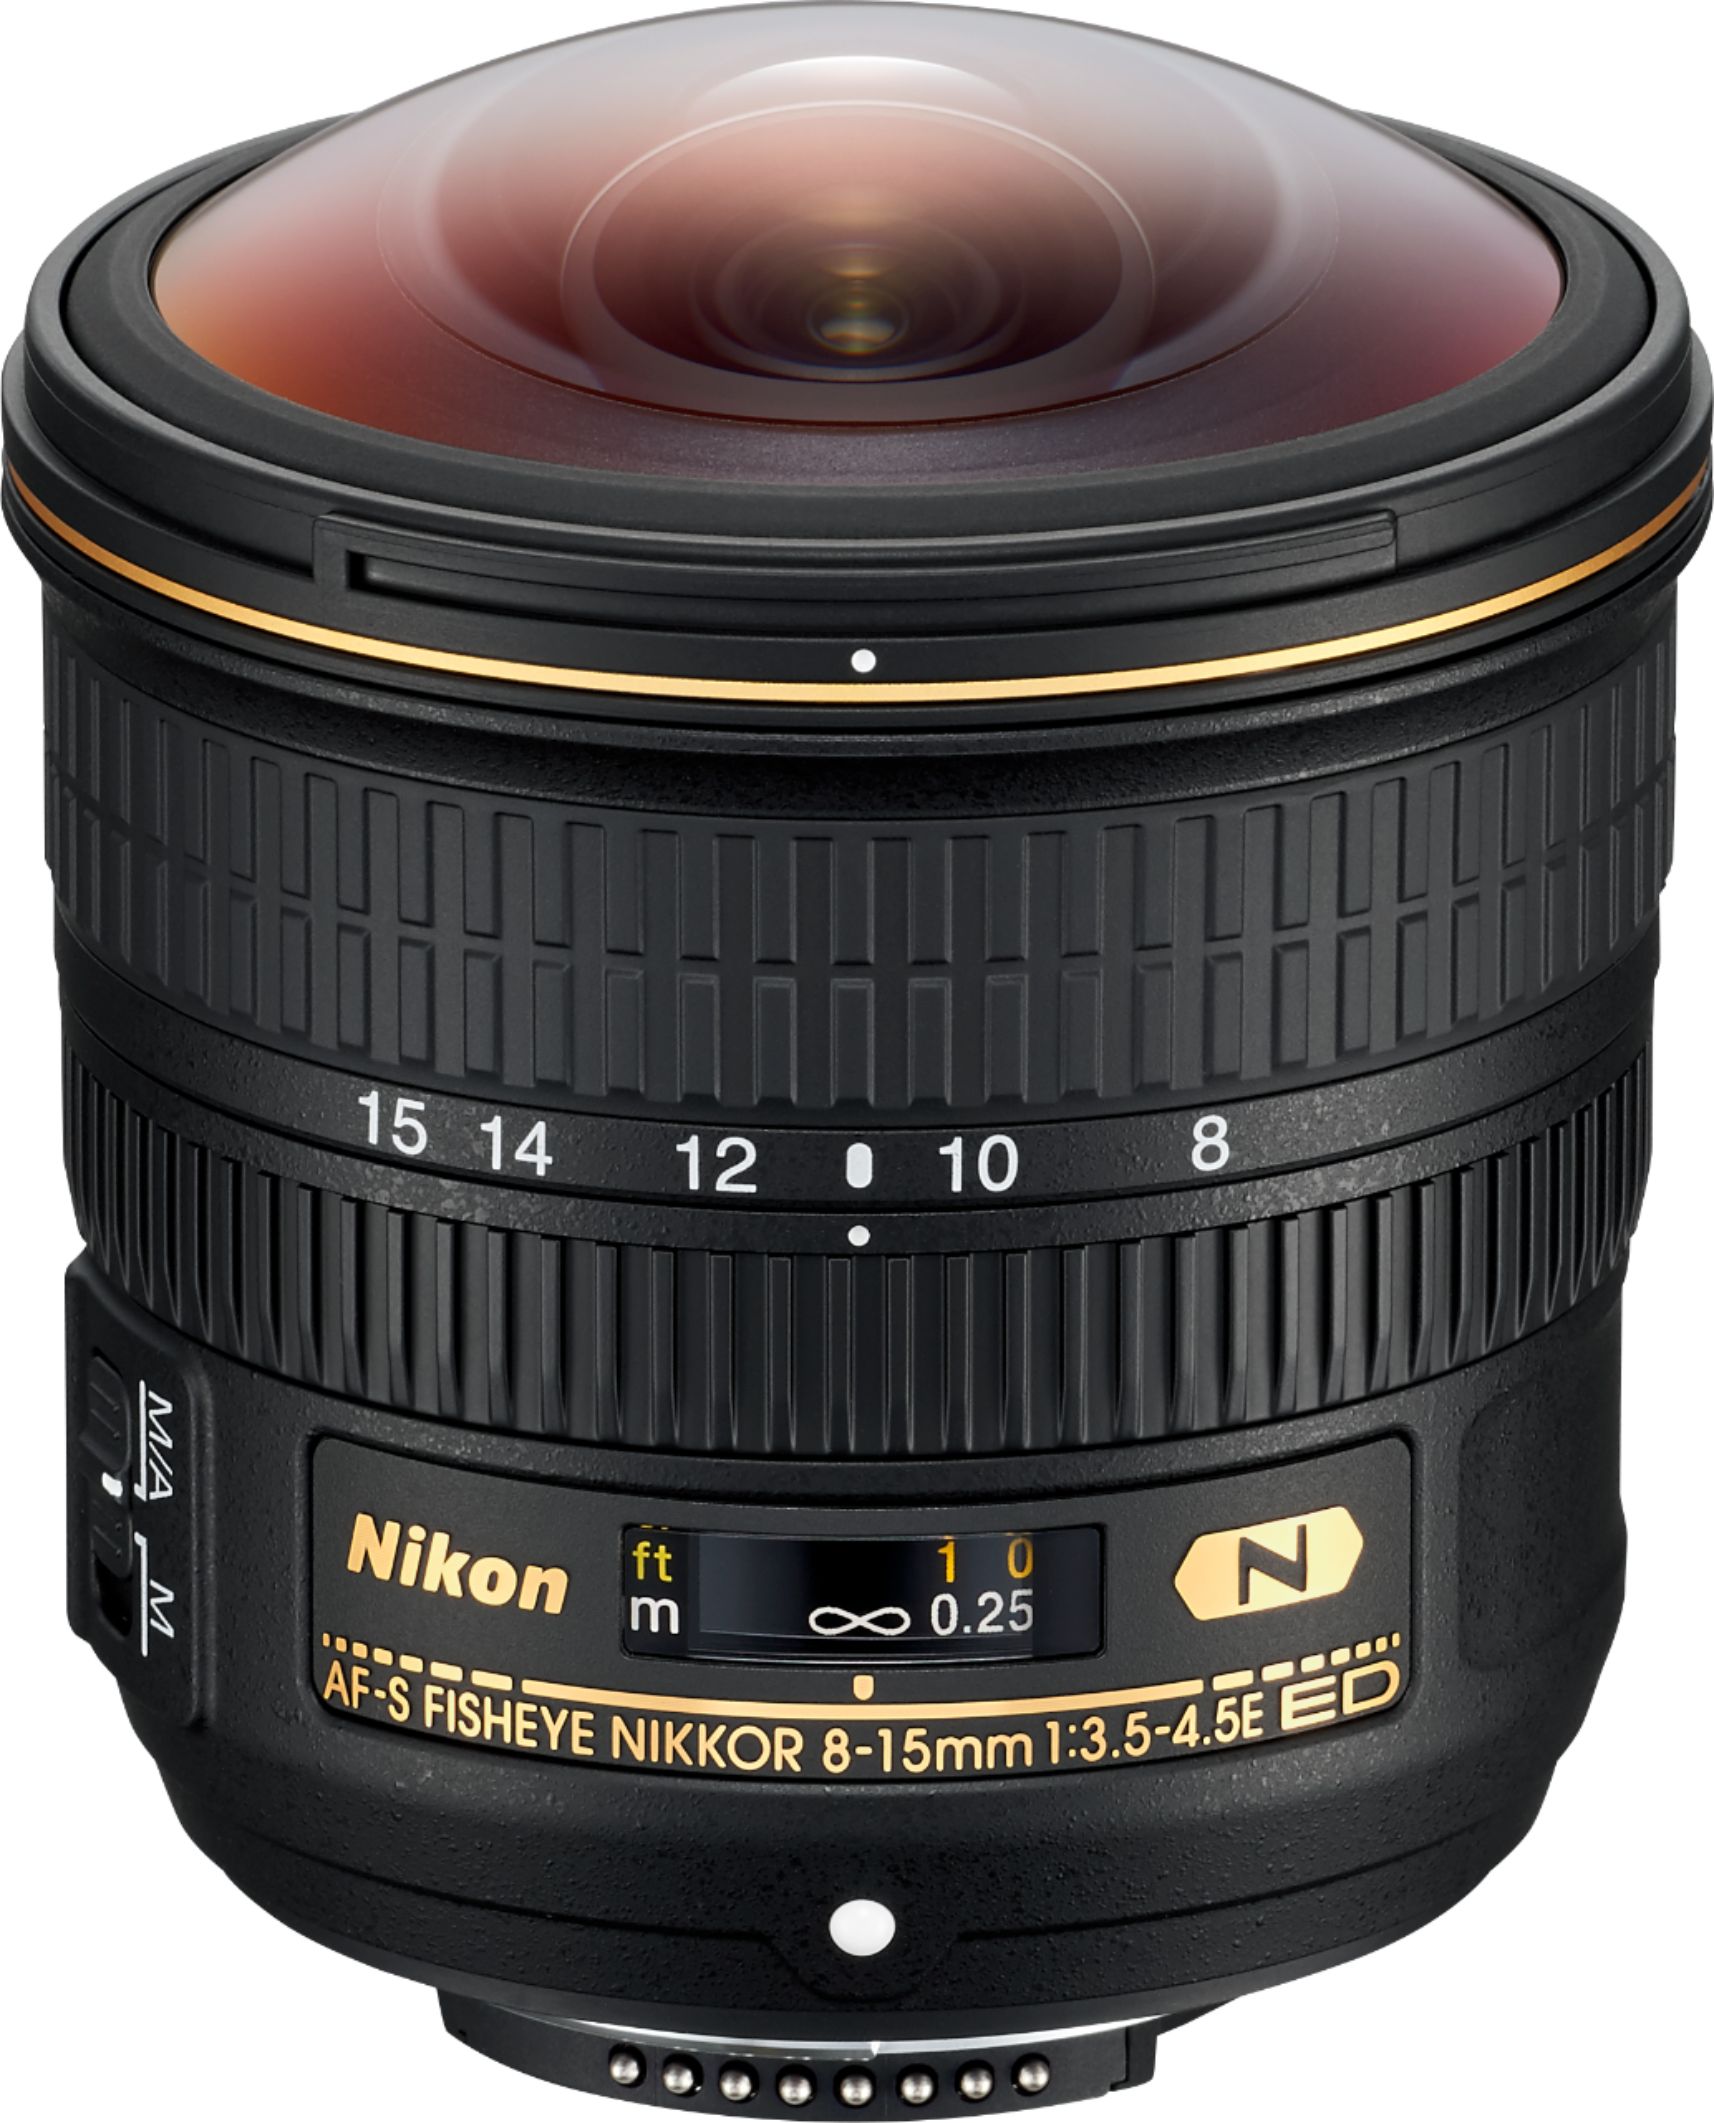 Nikon - AF-S Fisheye-Nikkor 8-15mm f/3.5-4.5 E ED Fisheye Zoom Lens for